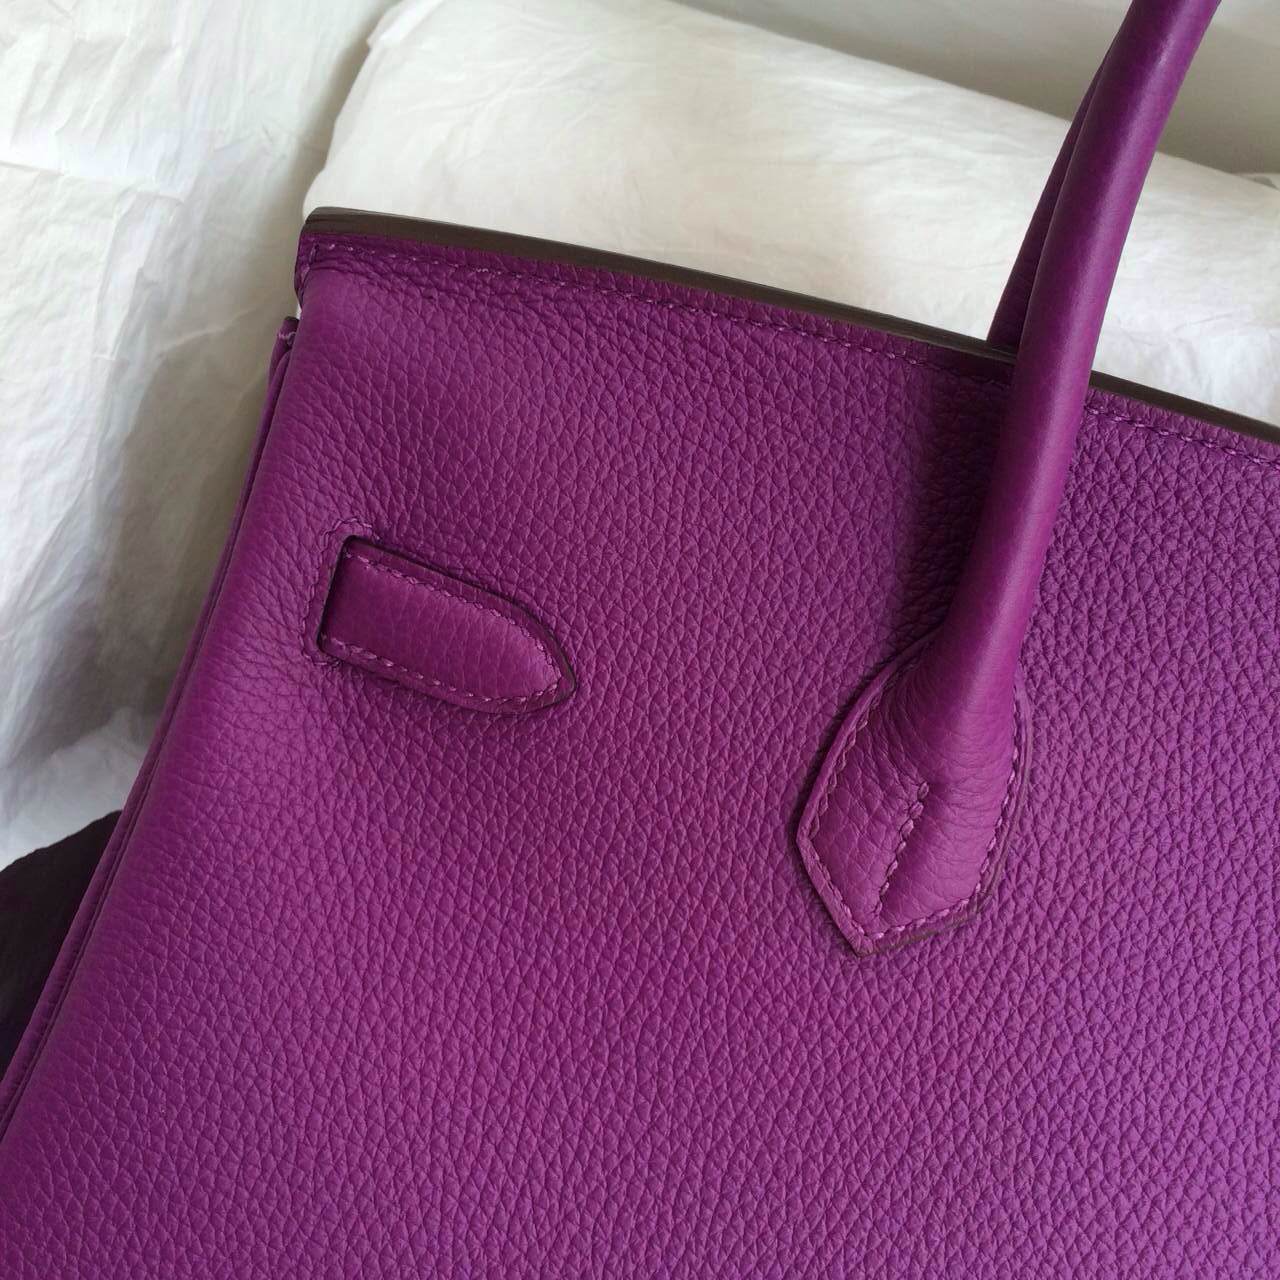 Hermes Birkin Handbag 30cm France Togo Leather P9 Purple Anemone Color